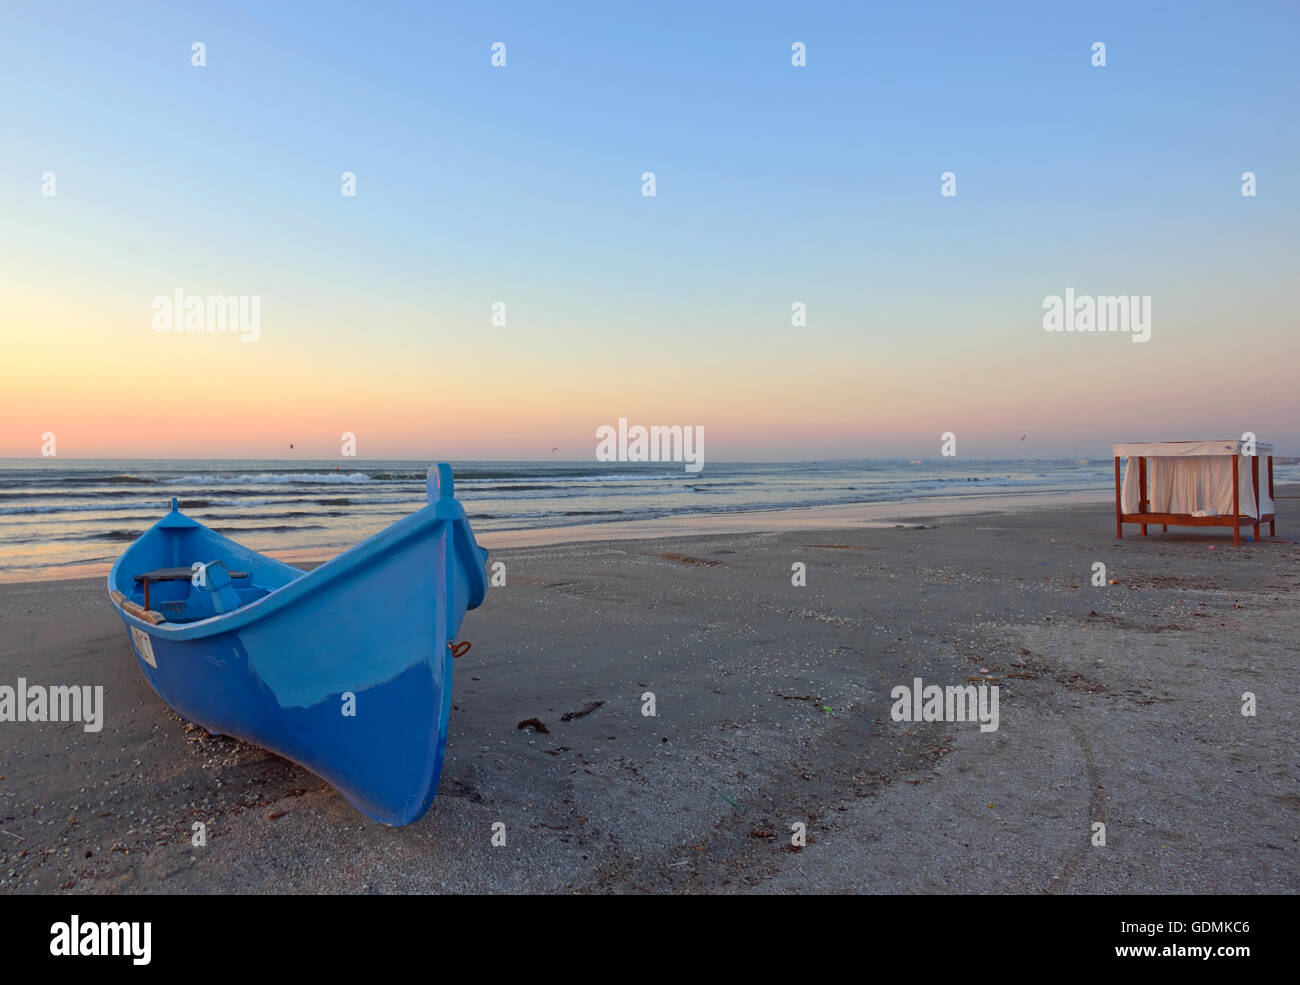 Sunrise on beach with blue boat Stock Photo